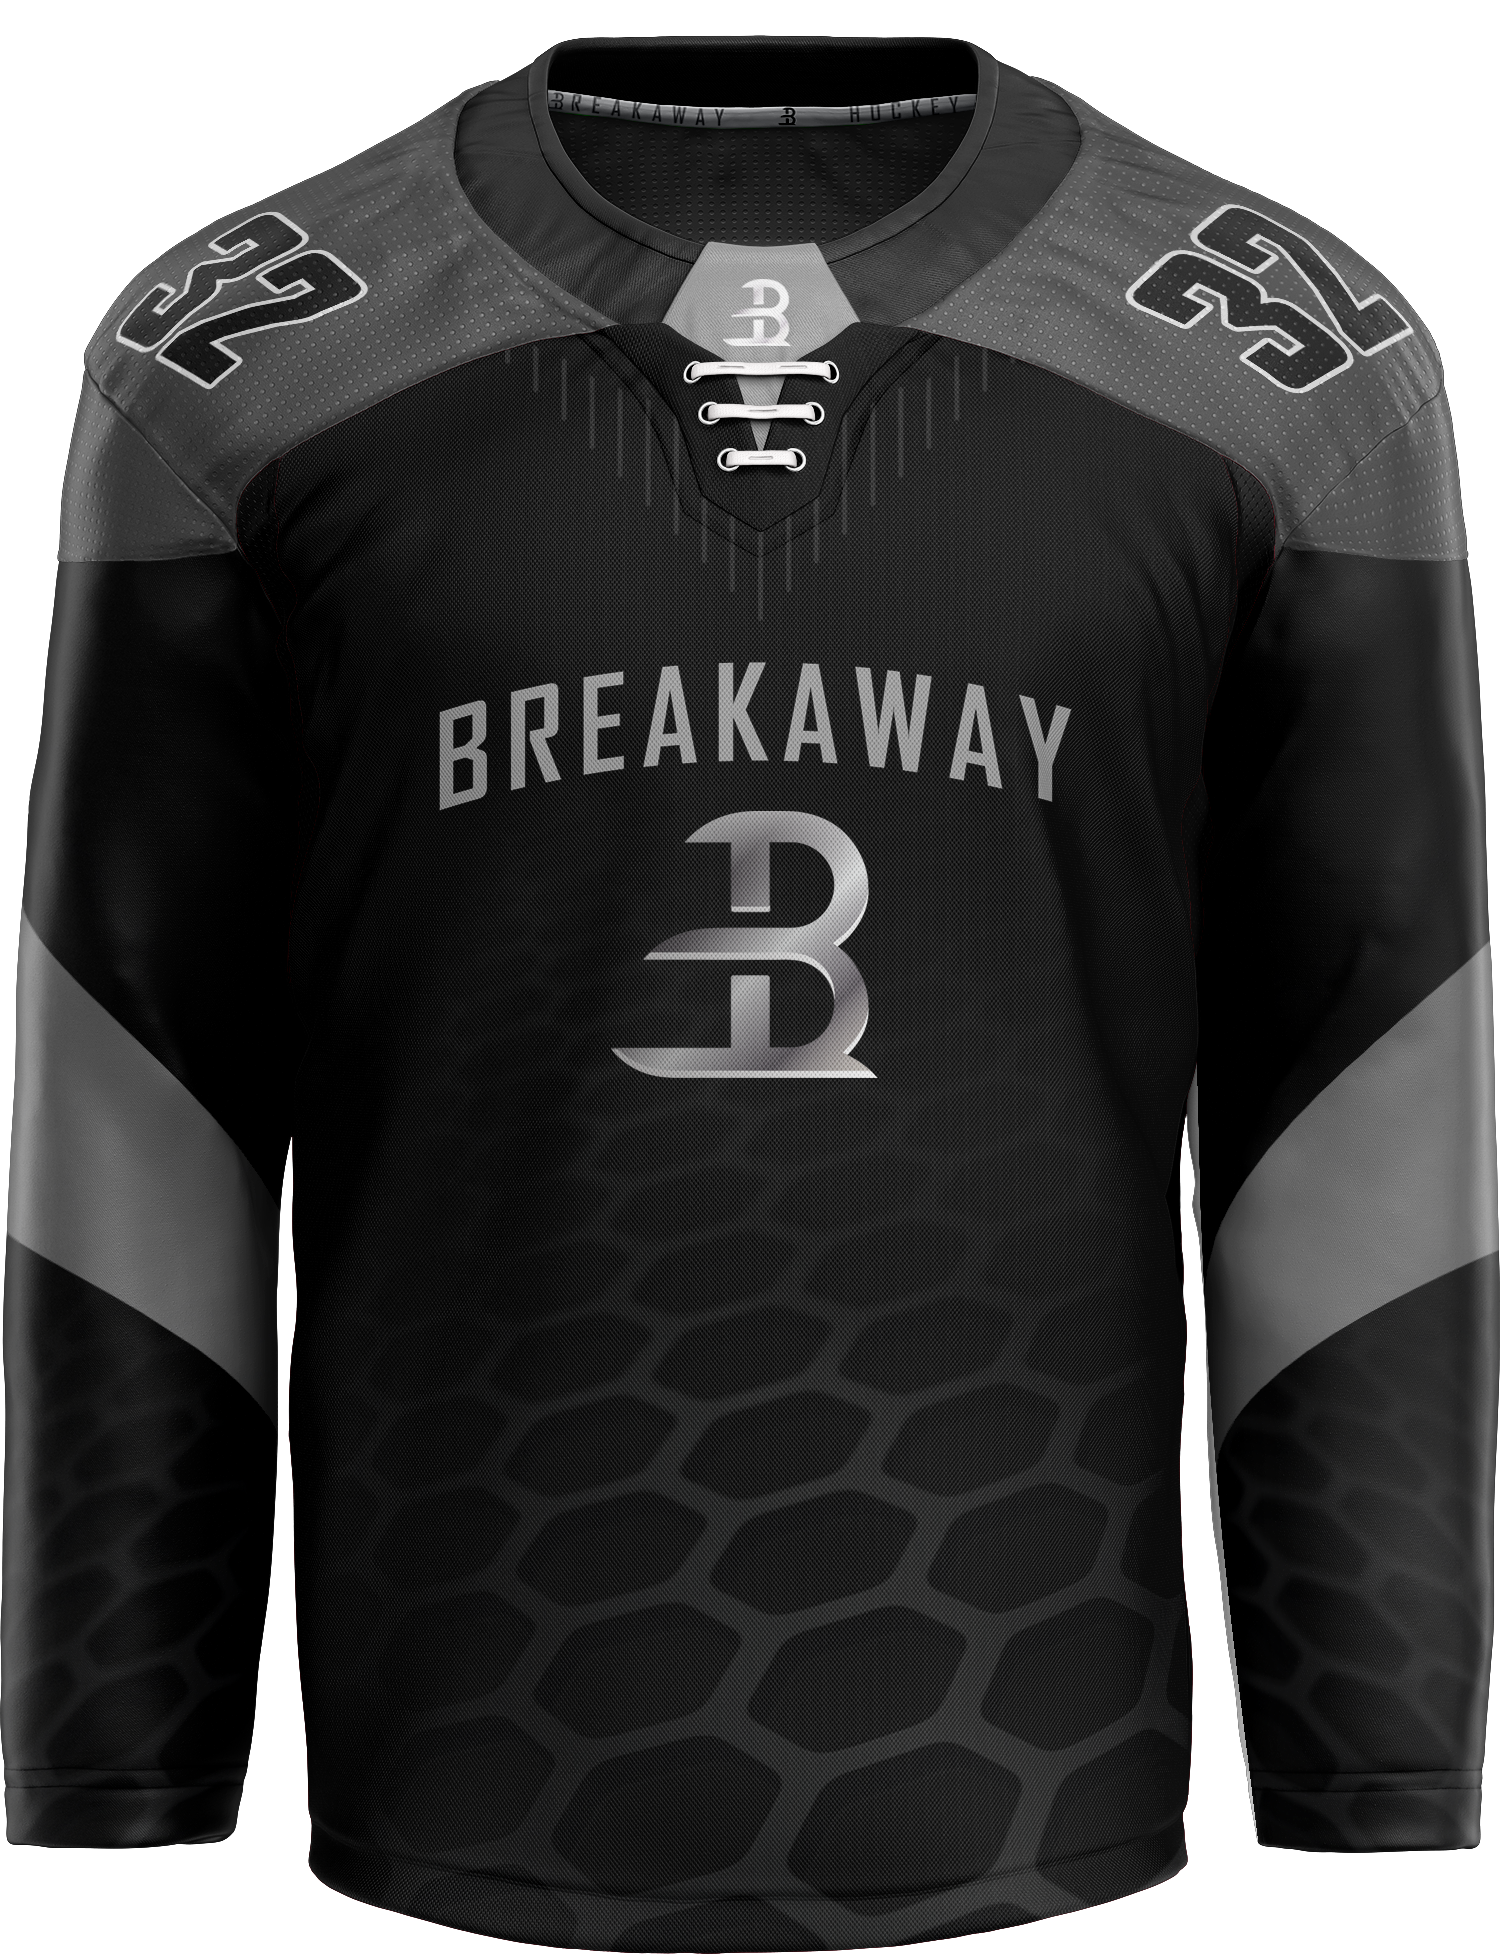 Breakaway Sports - Groundbreaking Sprts Outfitter